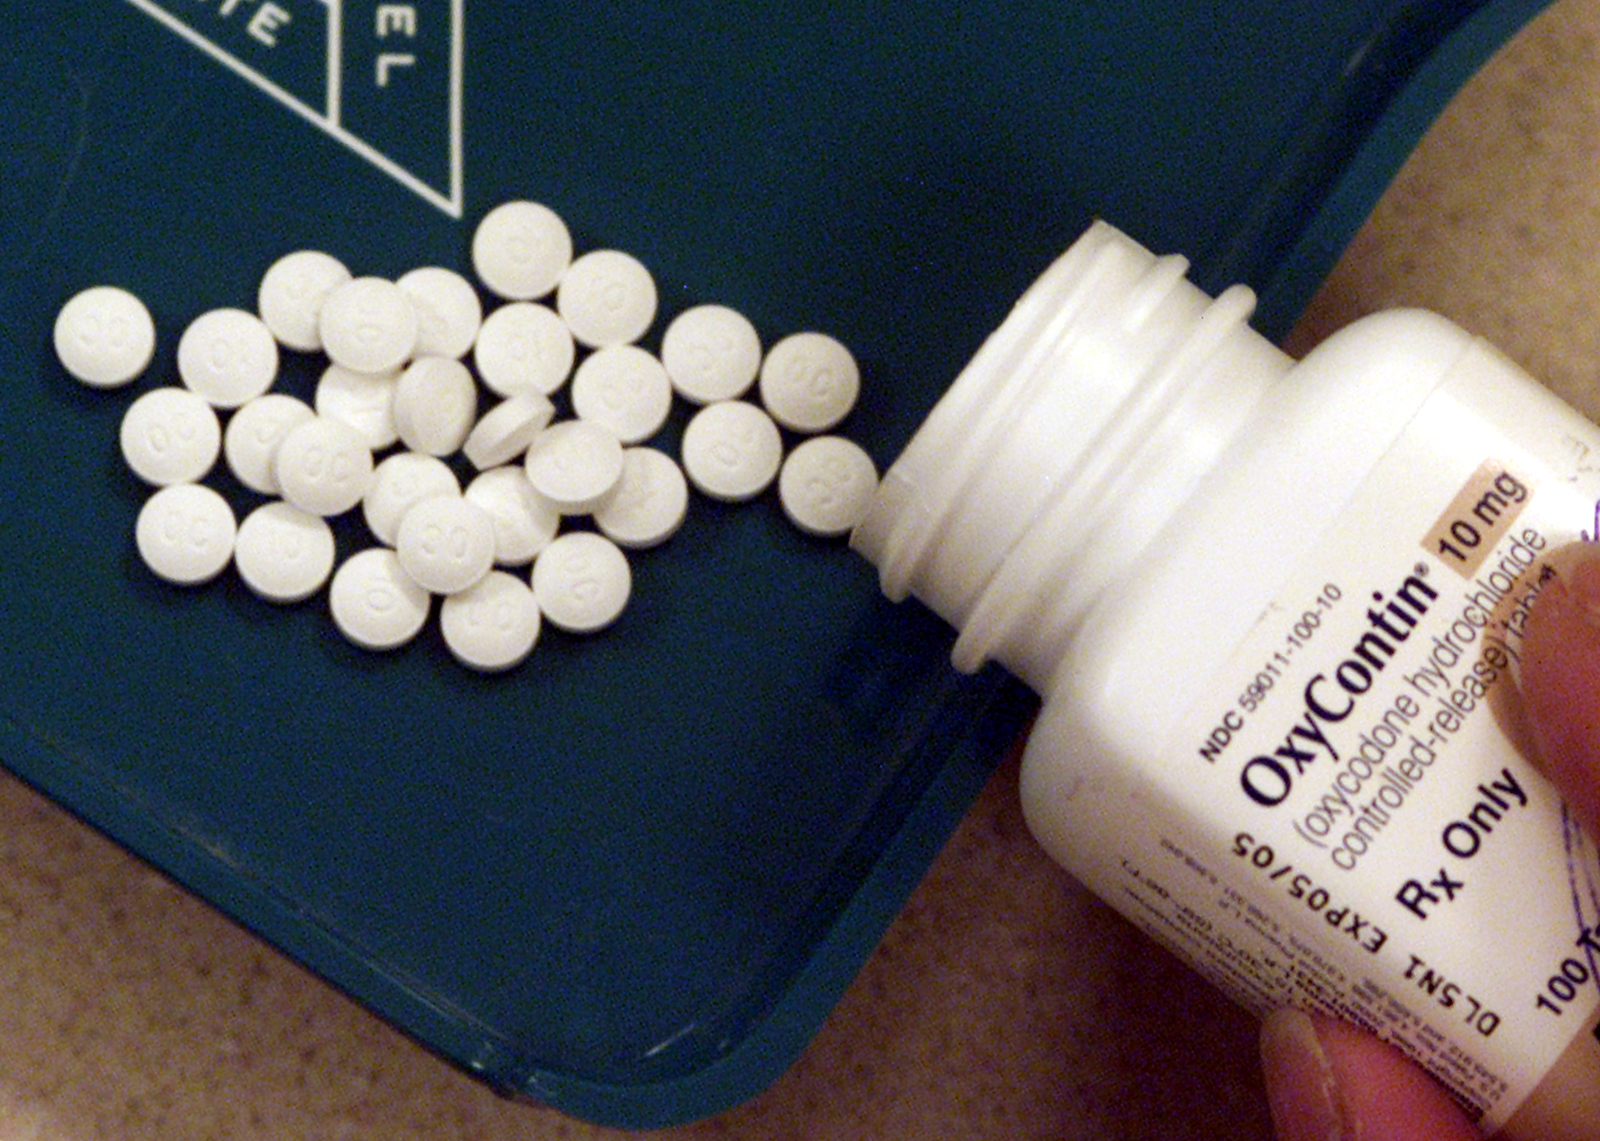 A bottle of OxyContin spilling opioid painkiller pills onto a countertop.